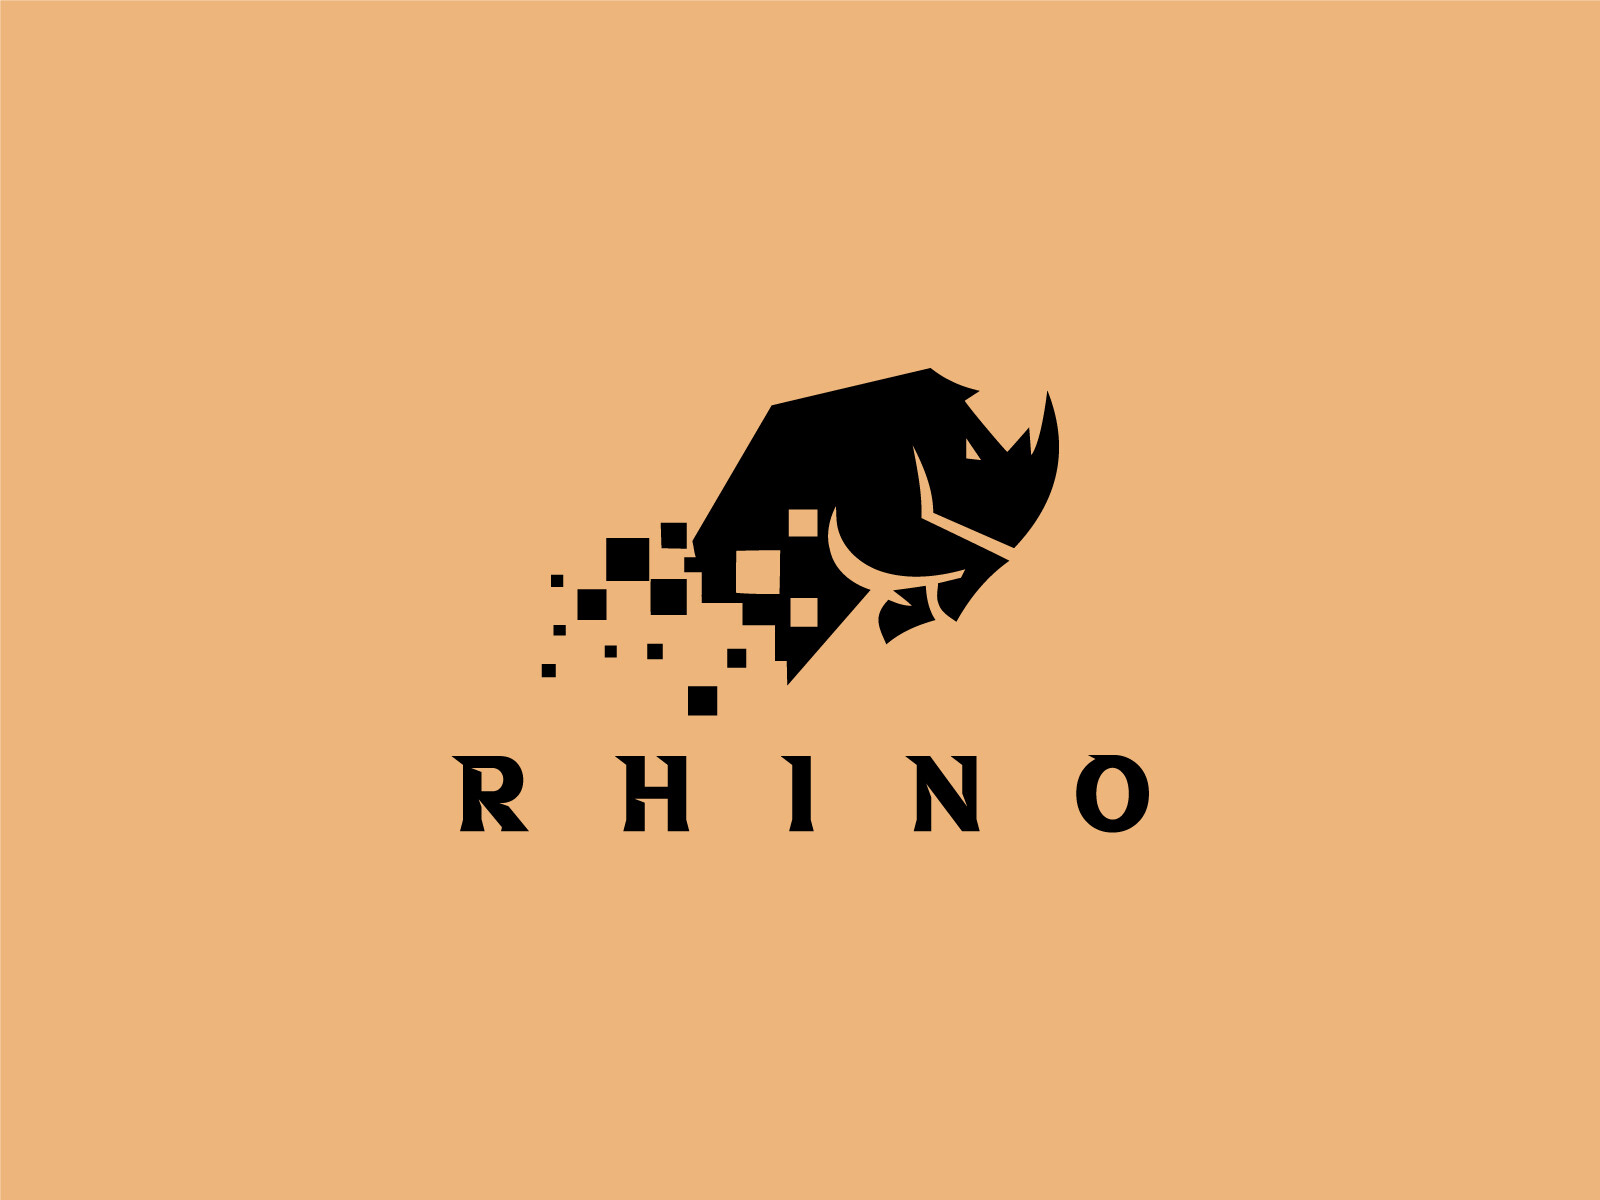 Rhino Humanoid Character 3D Model - .Max - 123Free3DModels